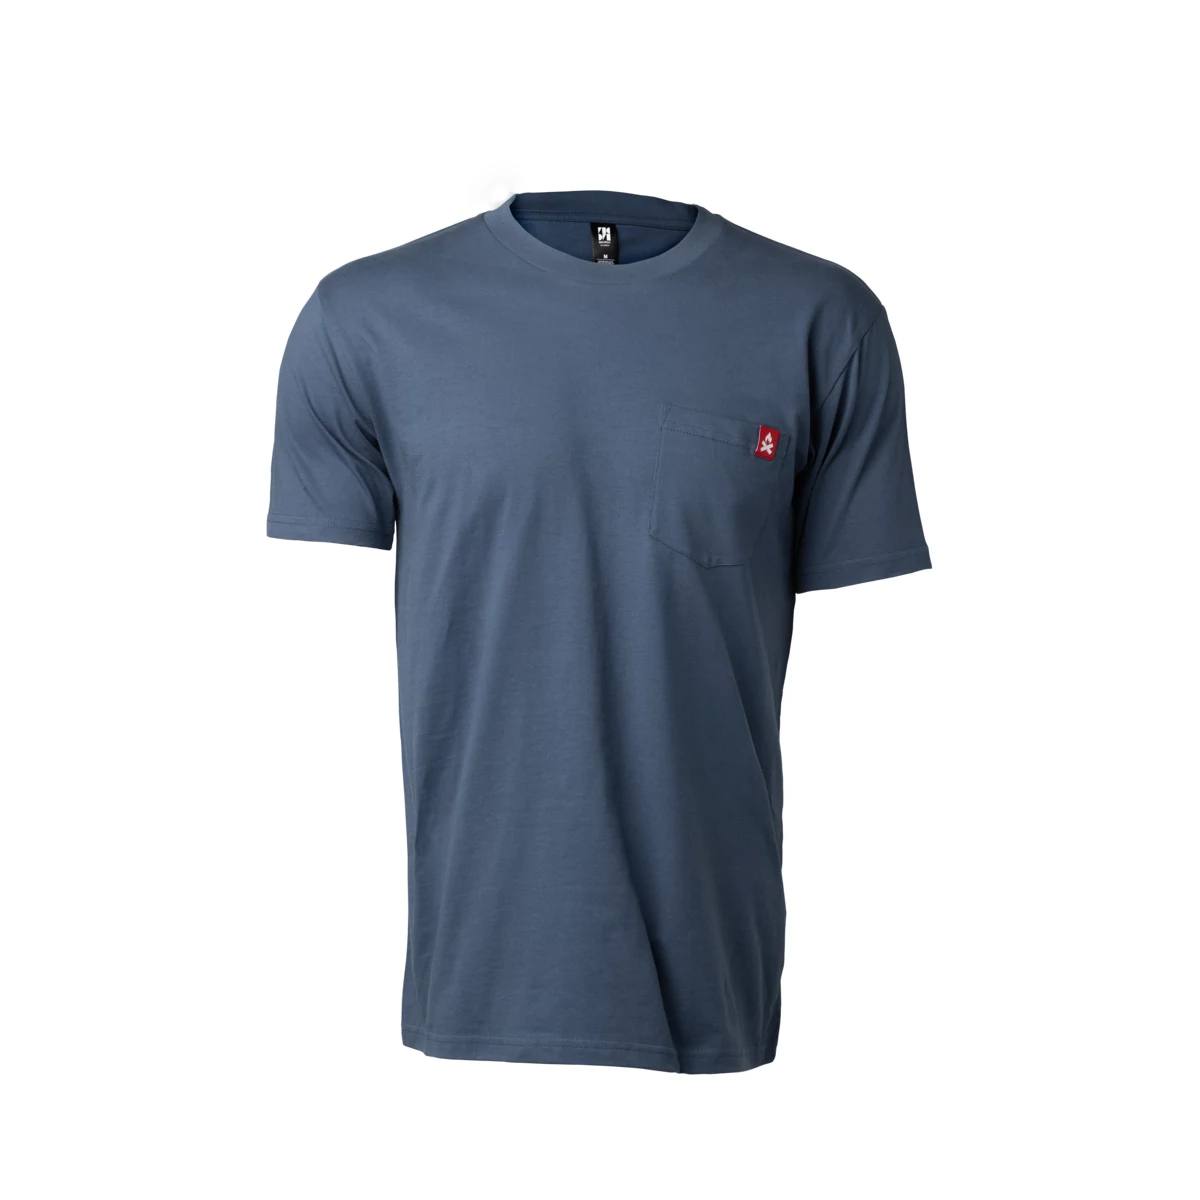 Camp Chef Cast Iron Pocket T-shirt - XL